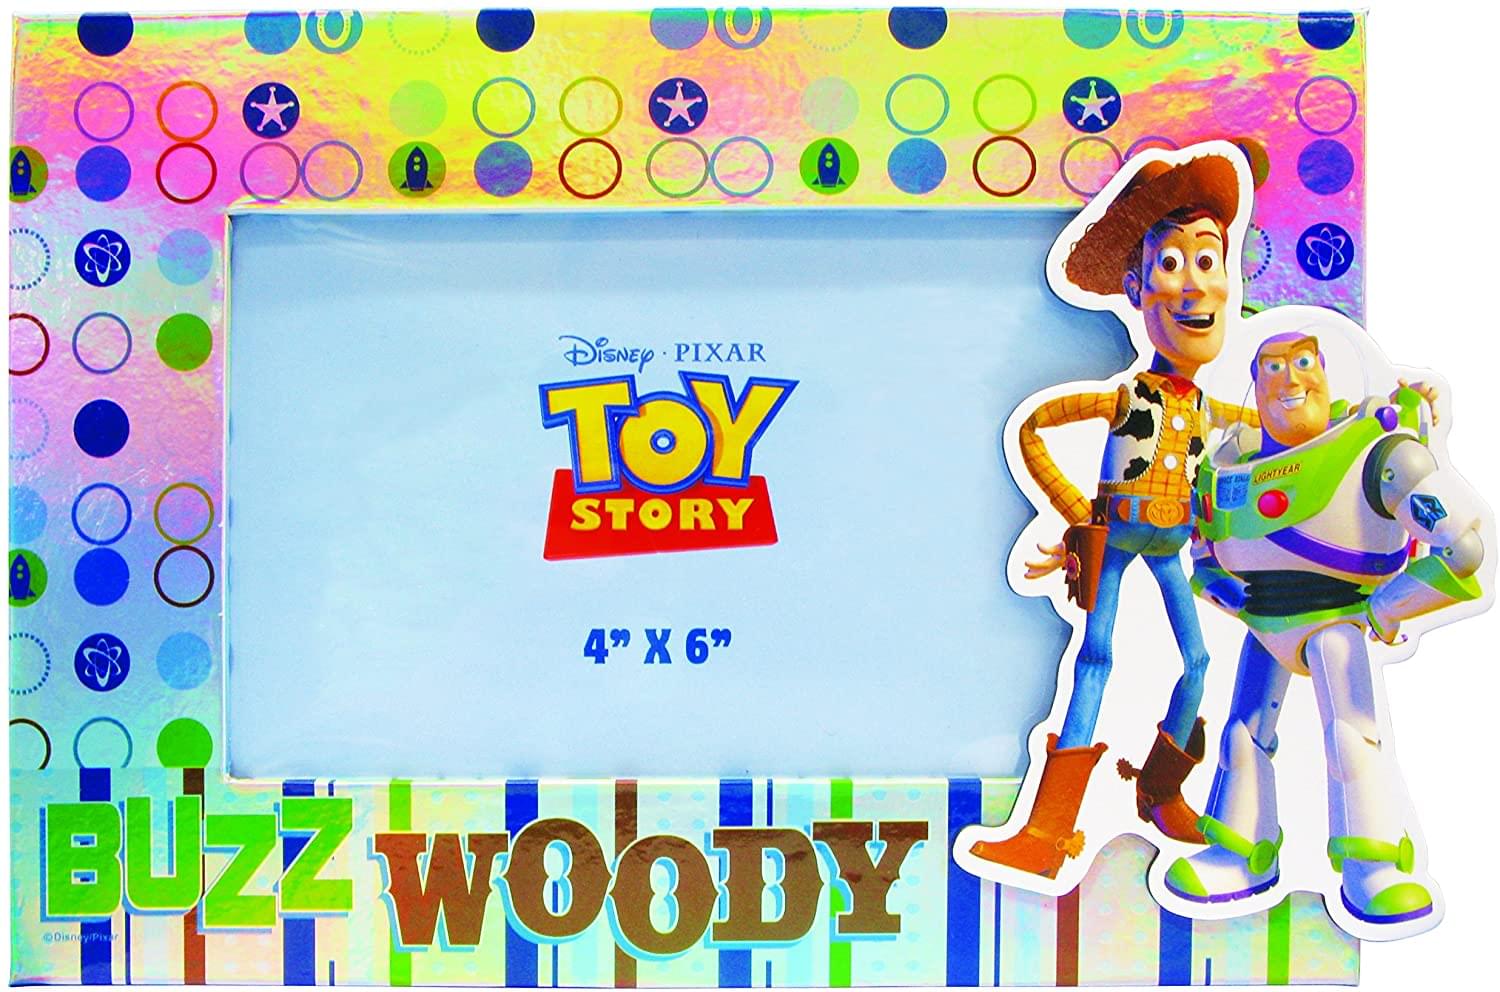 Disney/Pixar Toy Story 4" x 6" Picture Frame: "Buzz & Woody"